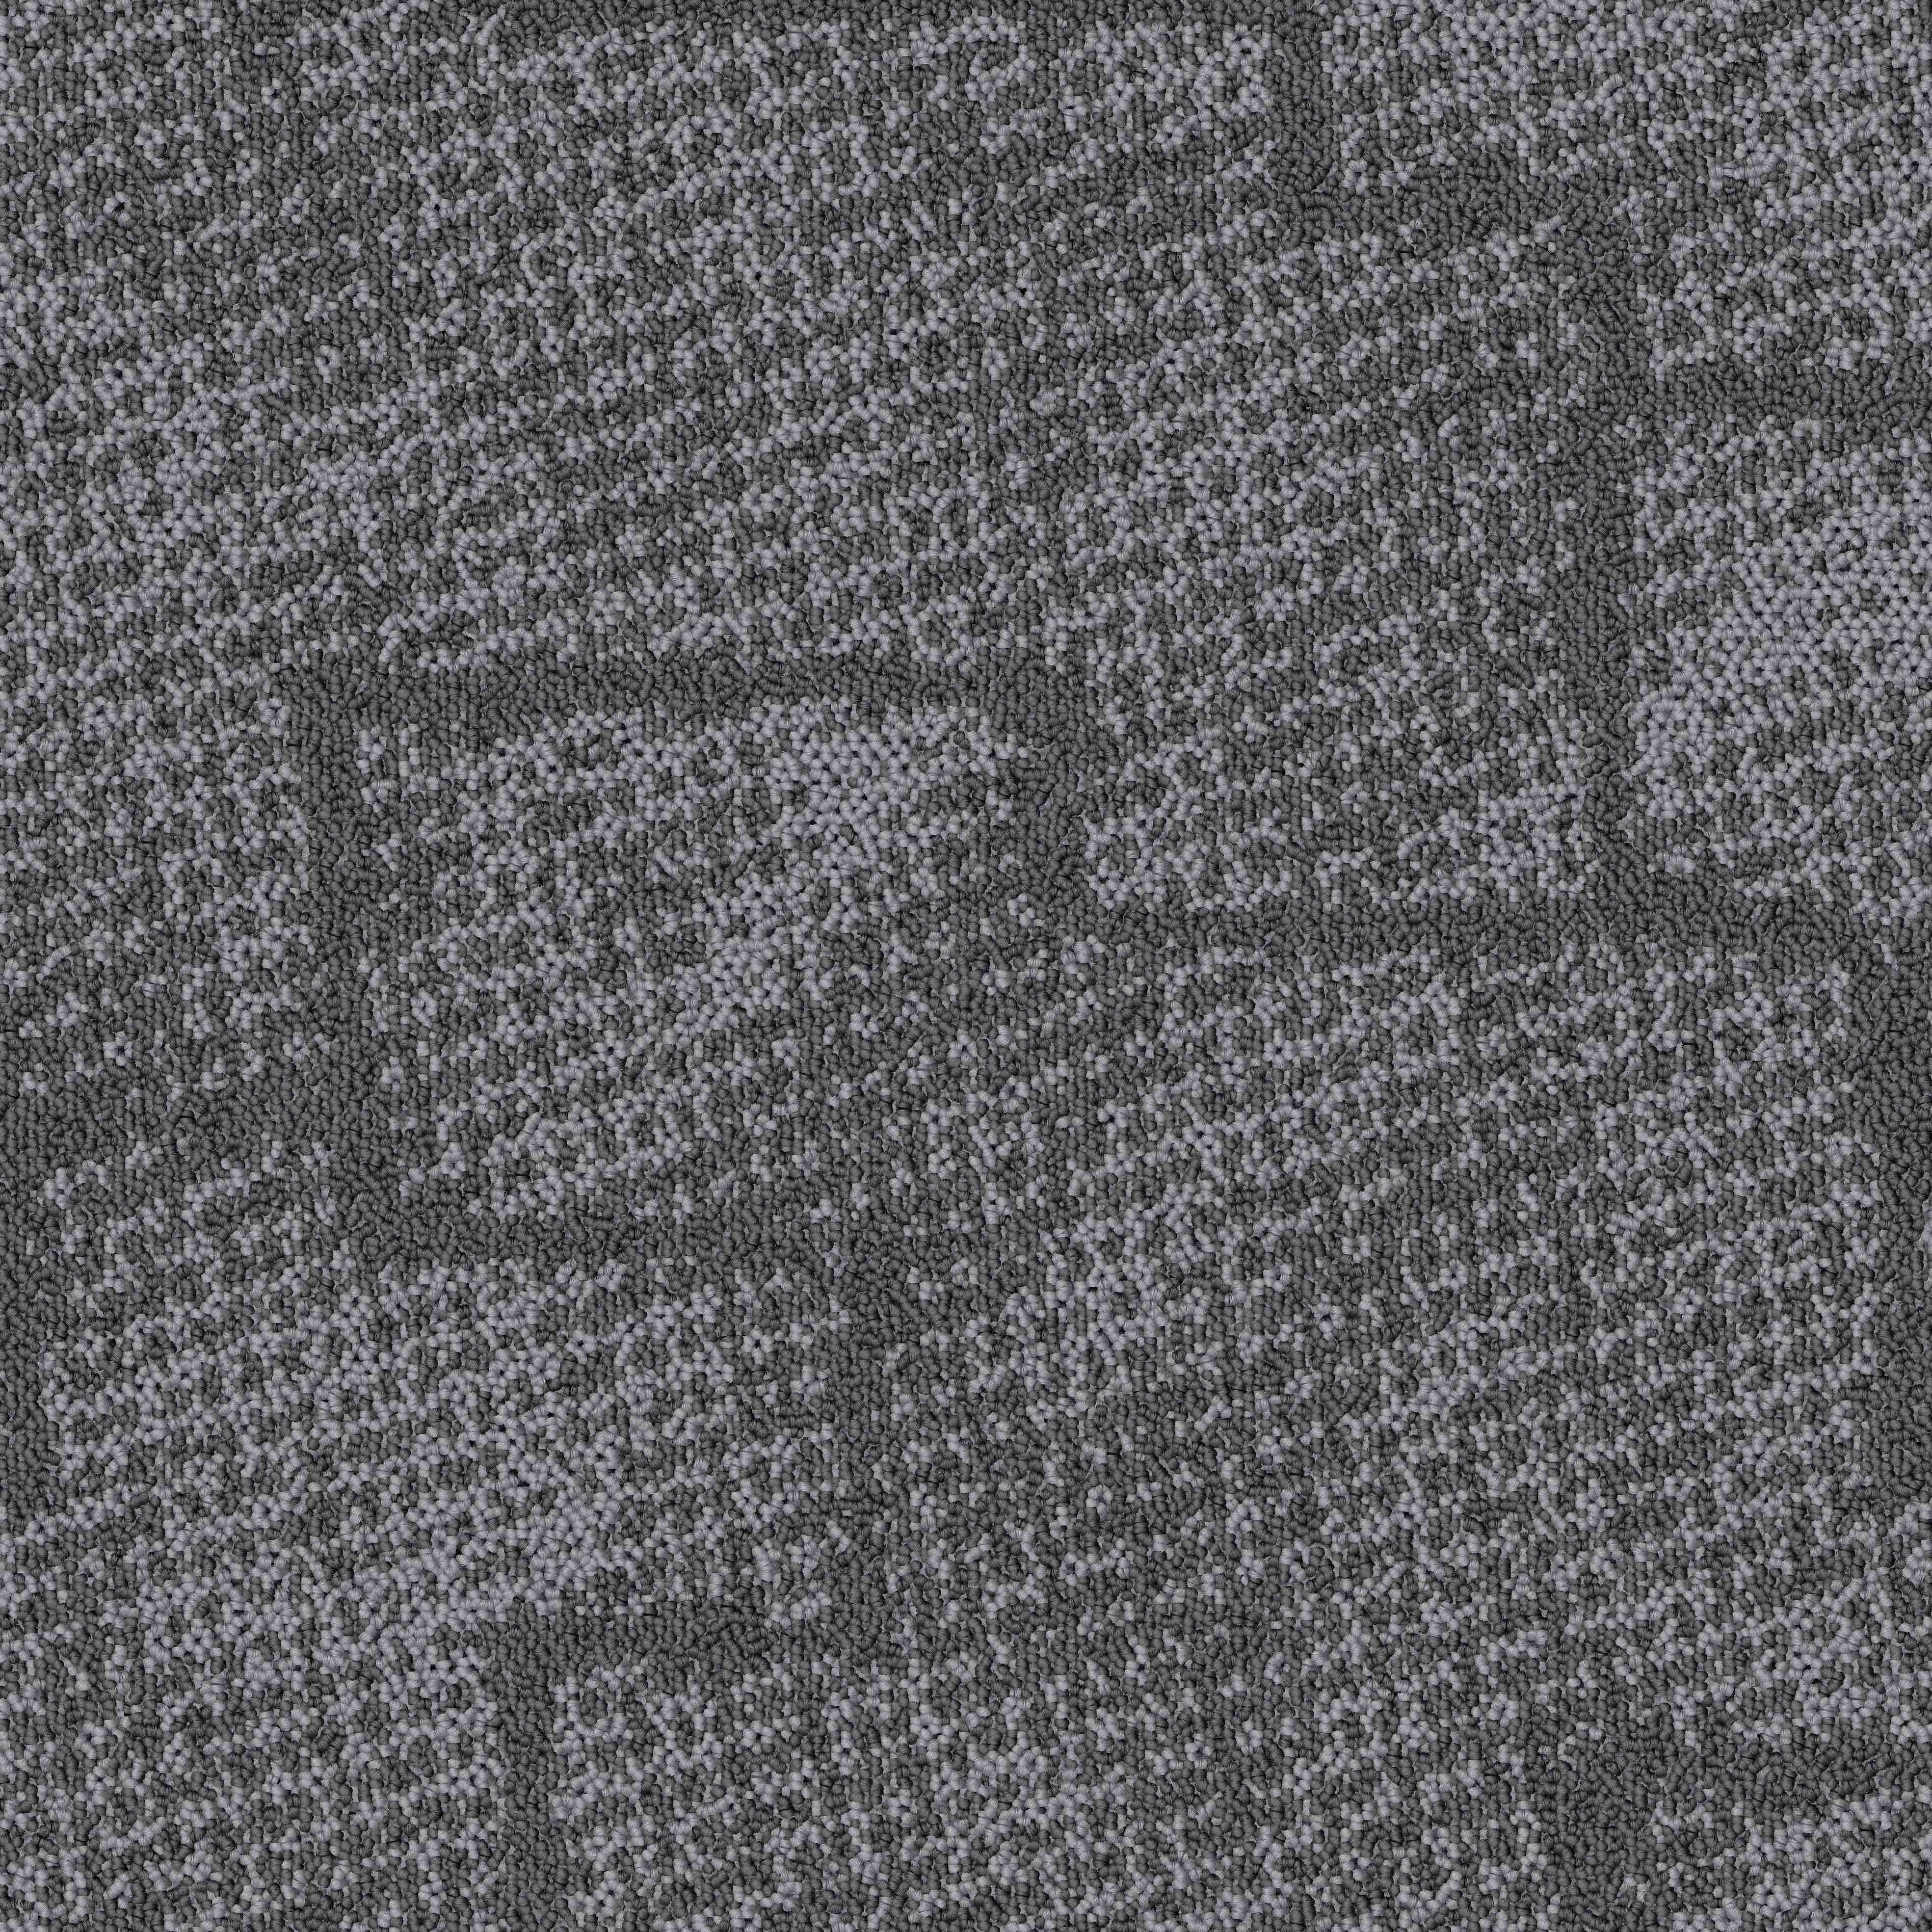 Paragon Inspiration Collection Mesh Carpet Tile Sonic Coal